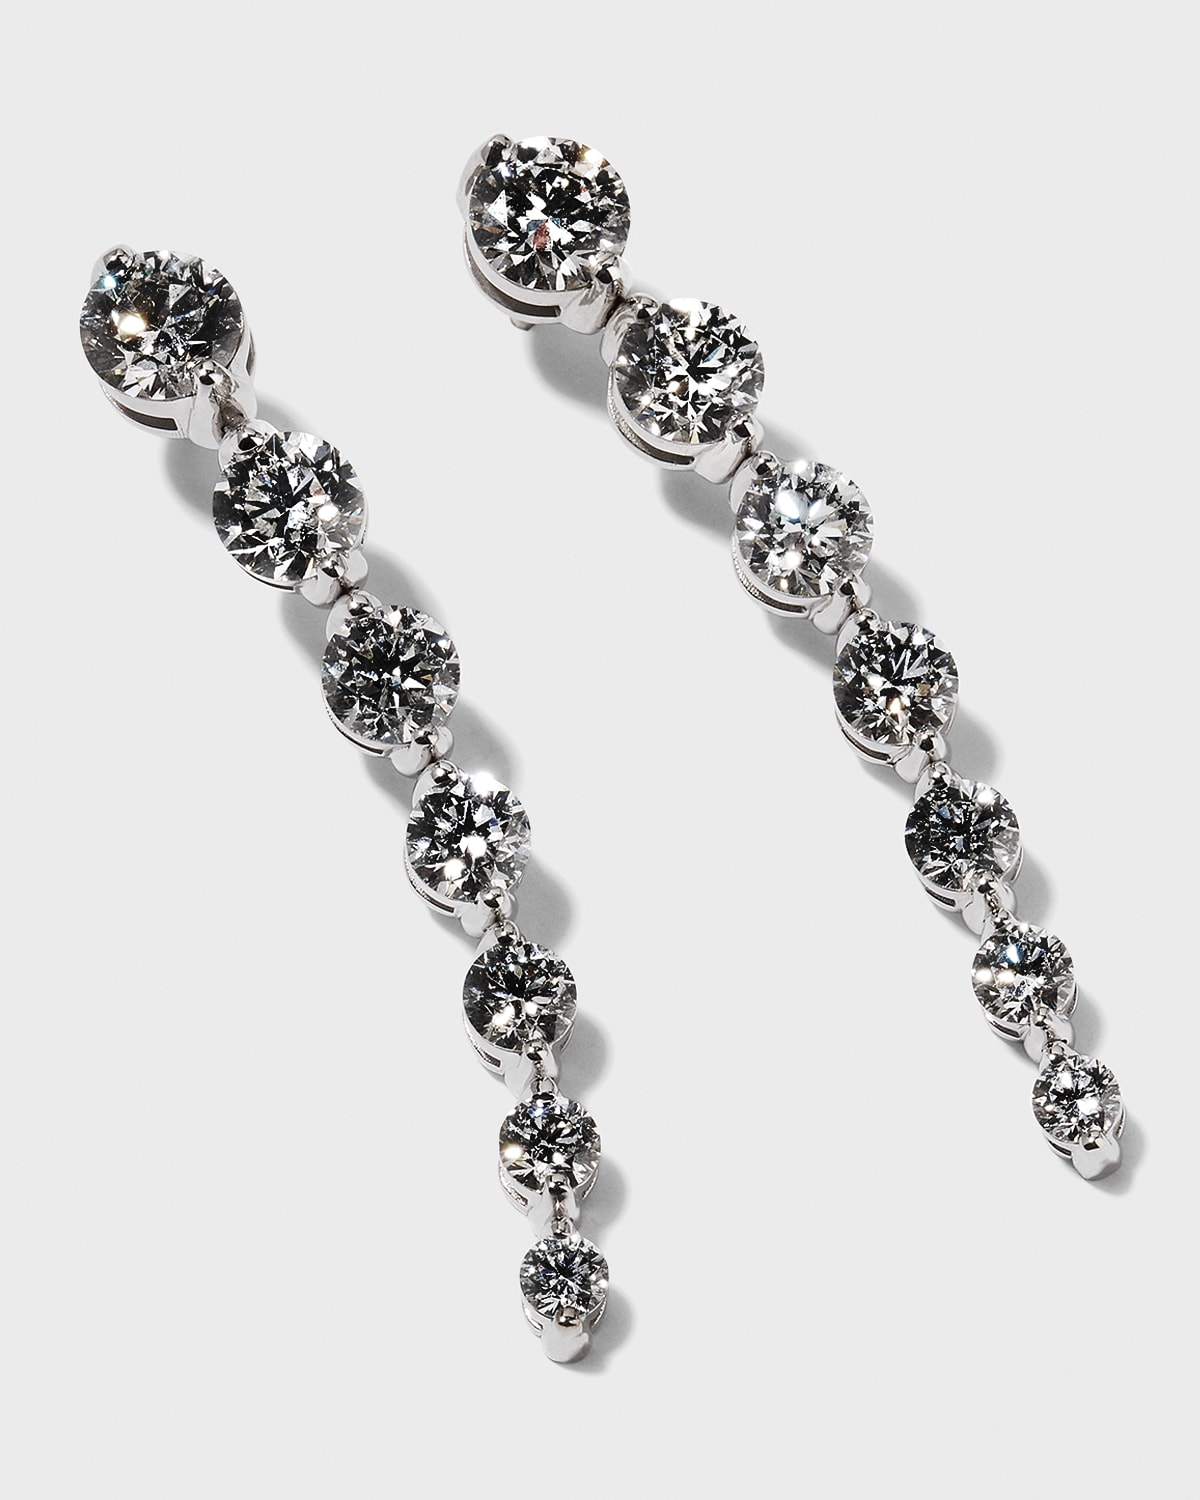 NM Diamond Collection 18k White Gold Diamond Graduate Dangle Earrings, 8tcw